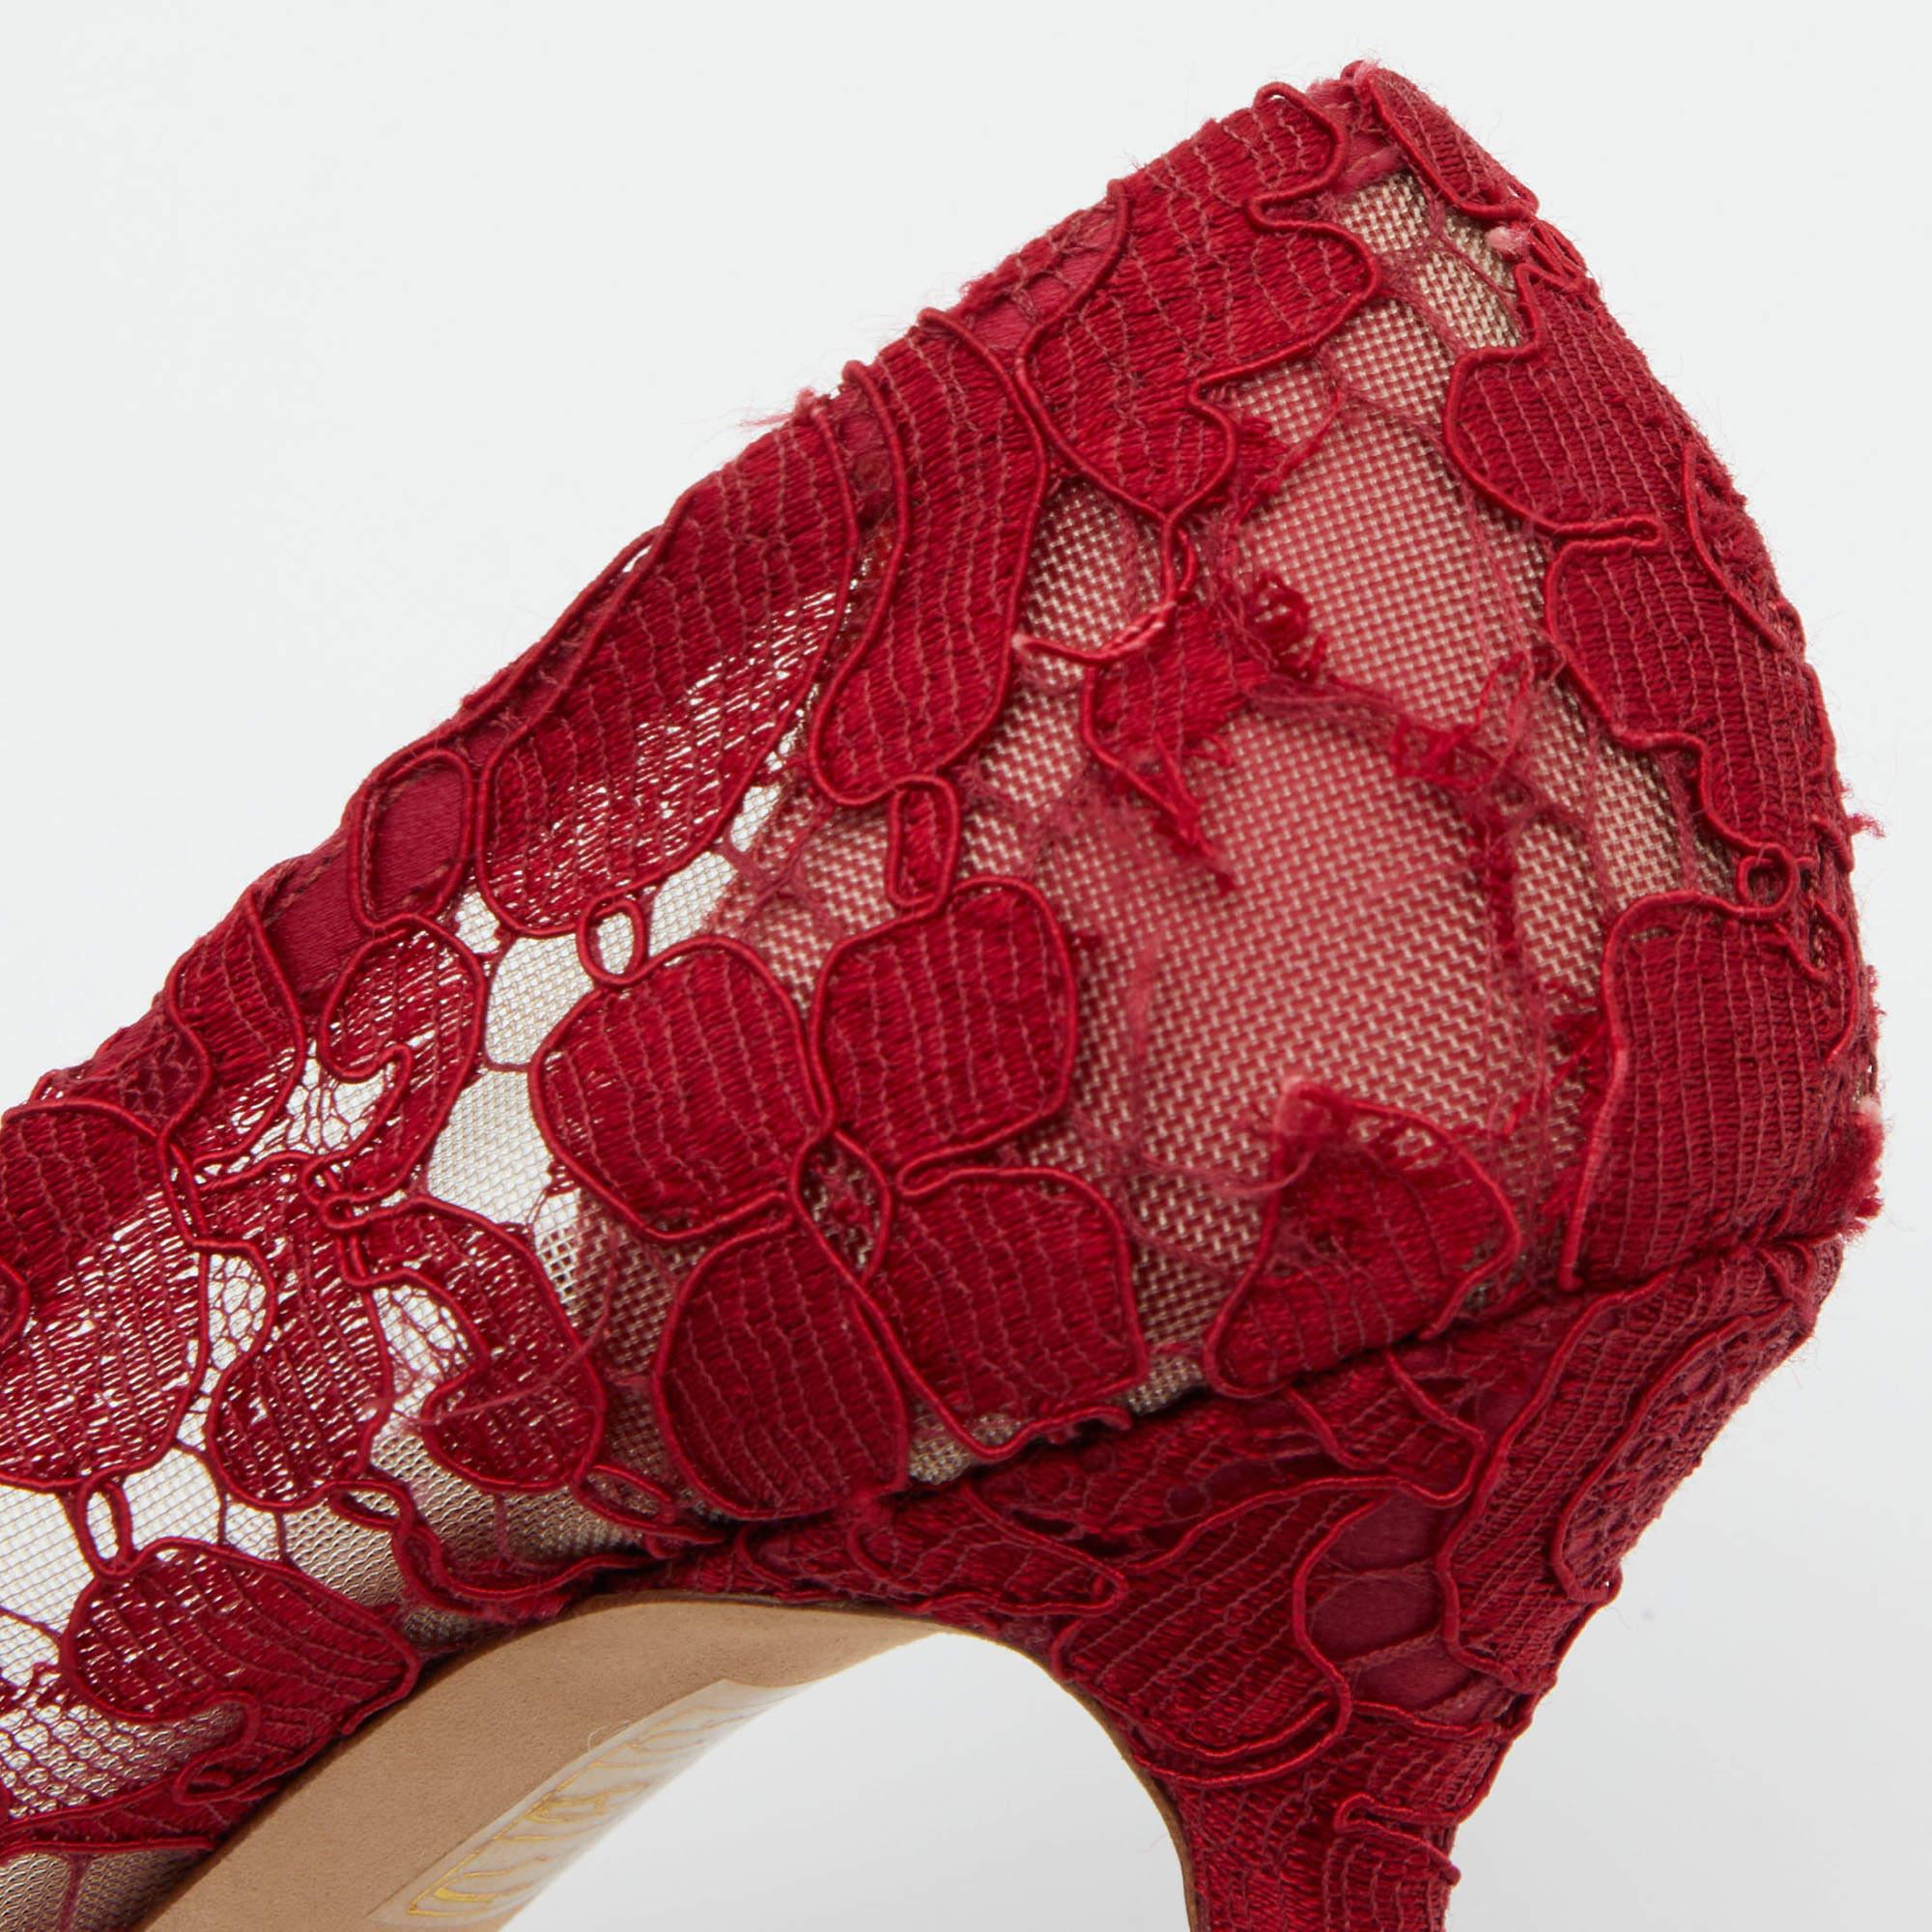 Dolce & Gabbana Red Lace Bellucci Pumps Size 37.5 4